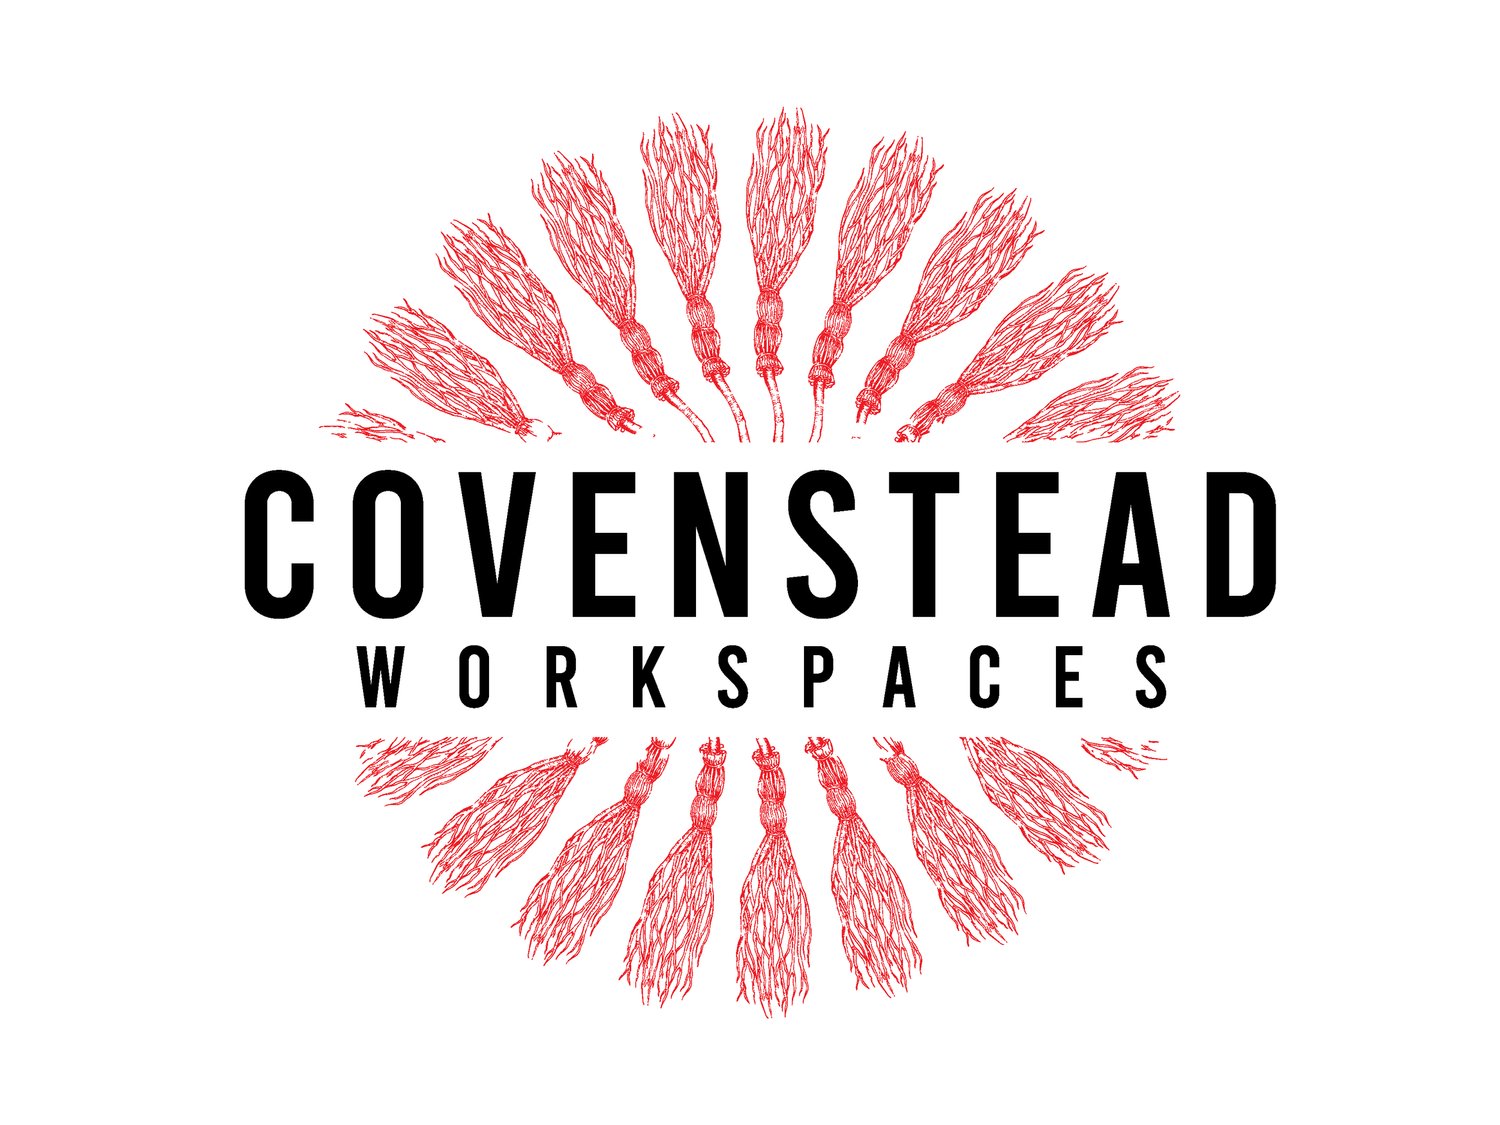 Covenstead Workspaces